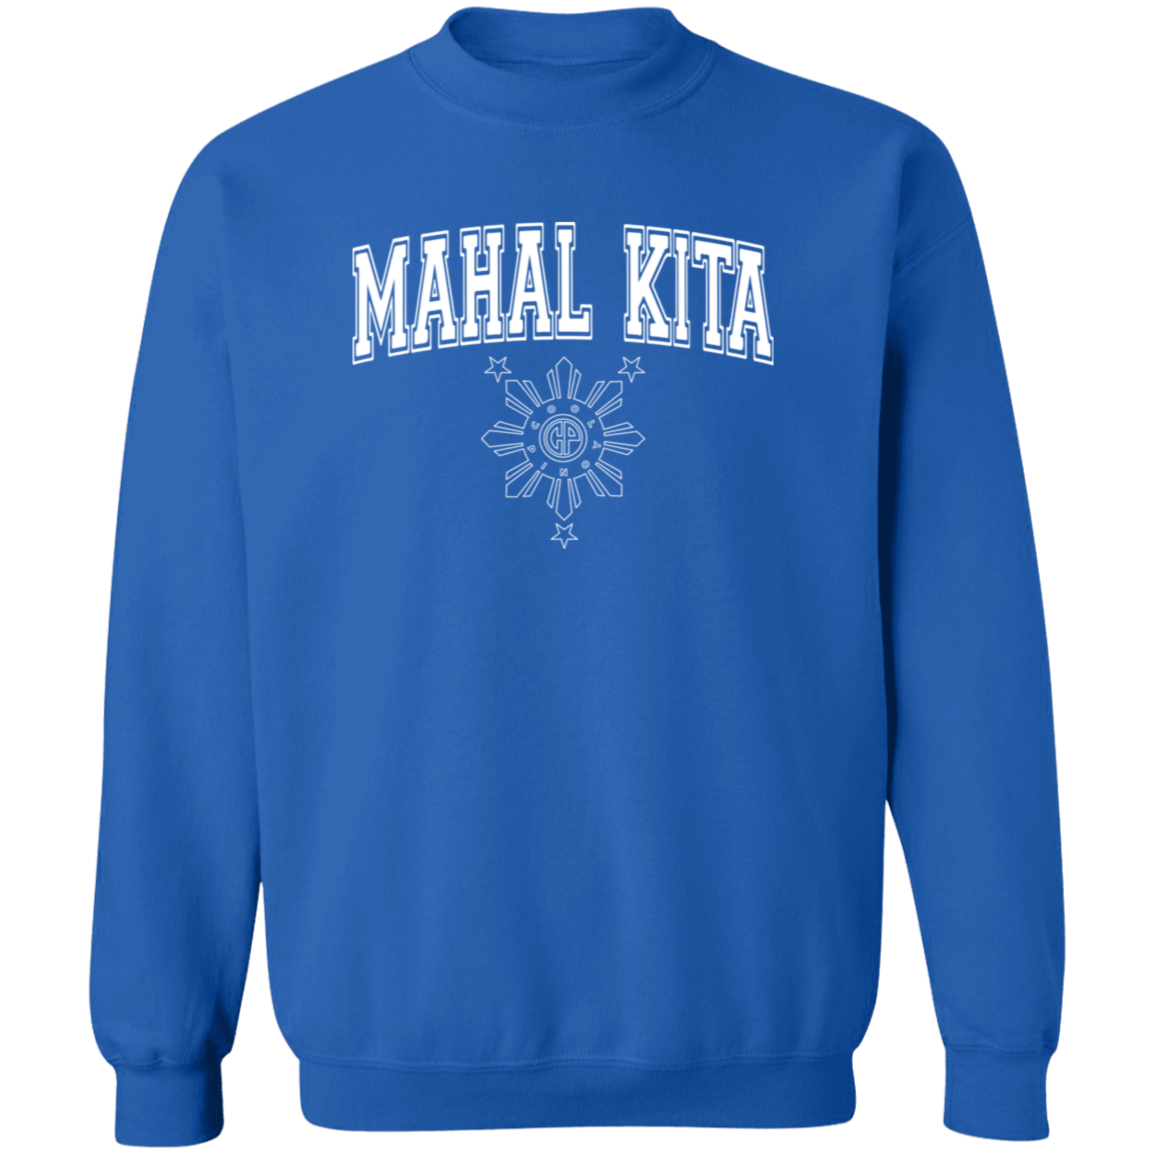 Mahal Kita University CP Unisex Crewneck Pullover Sweatshirt